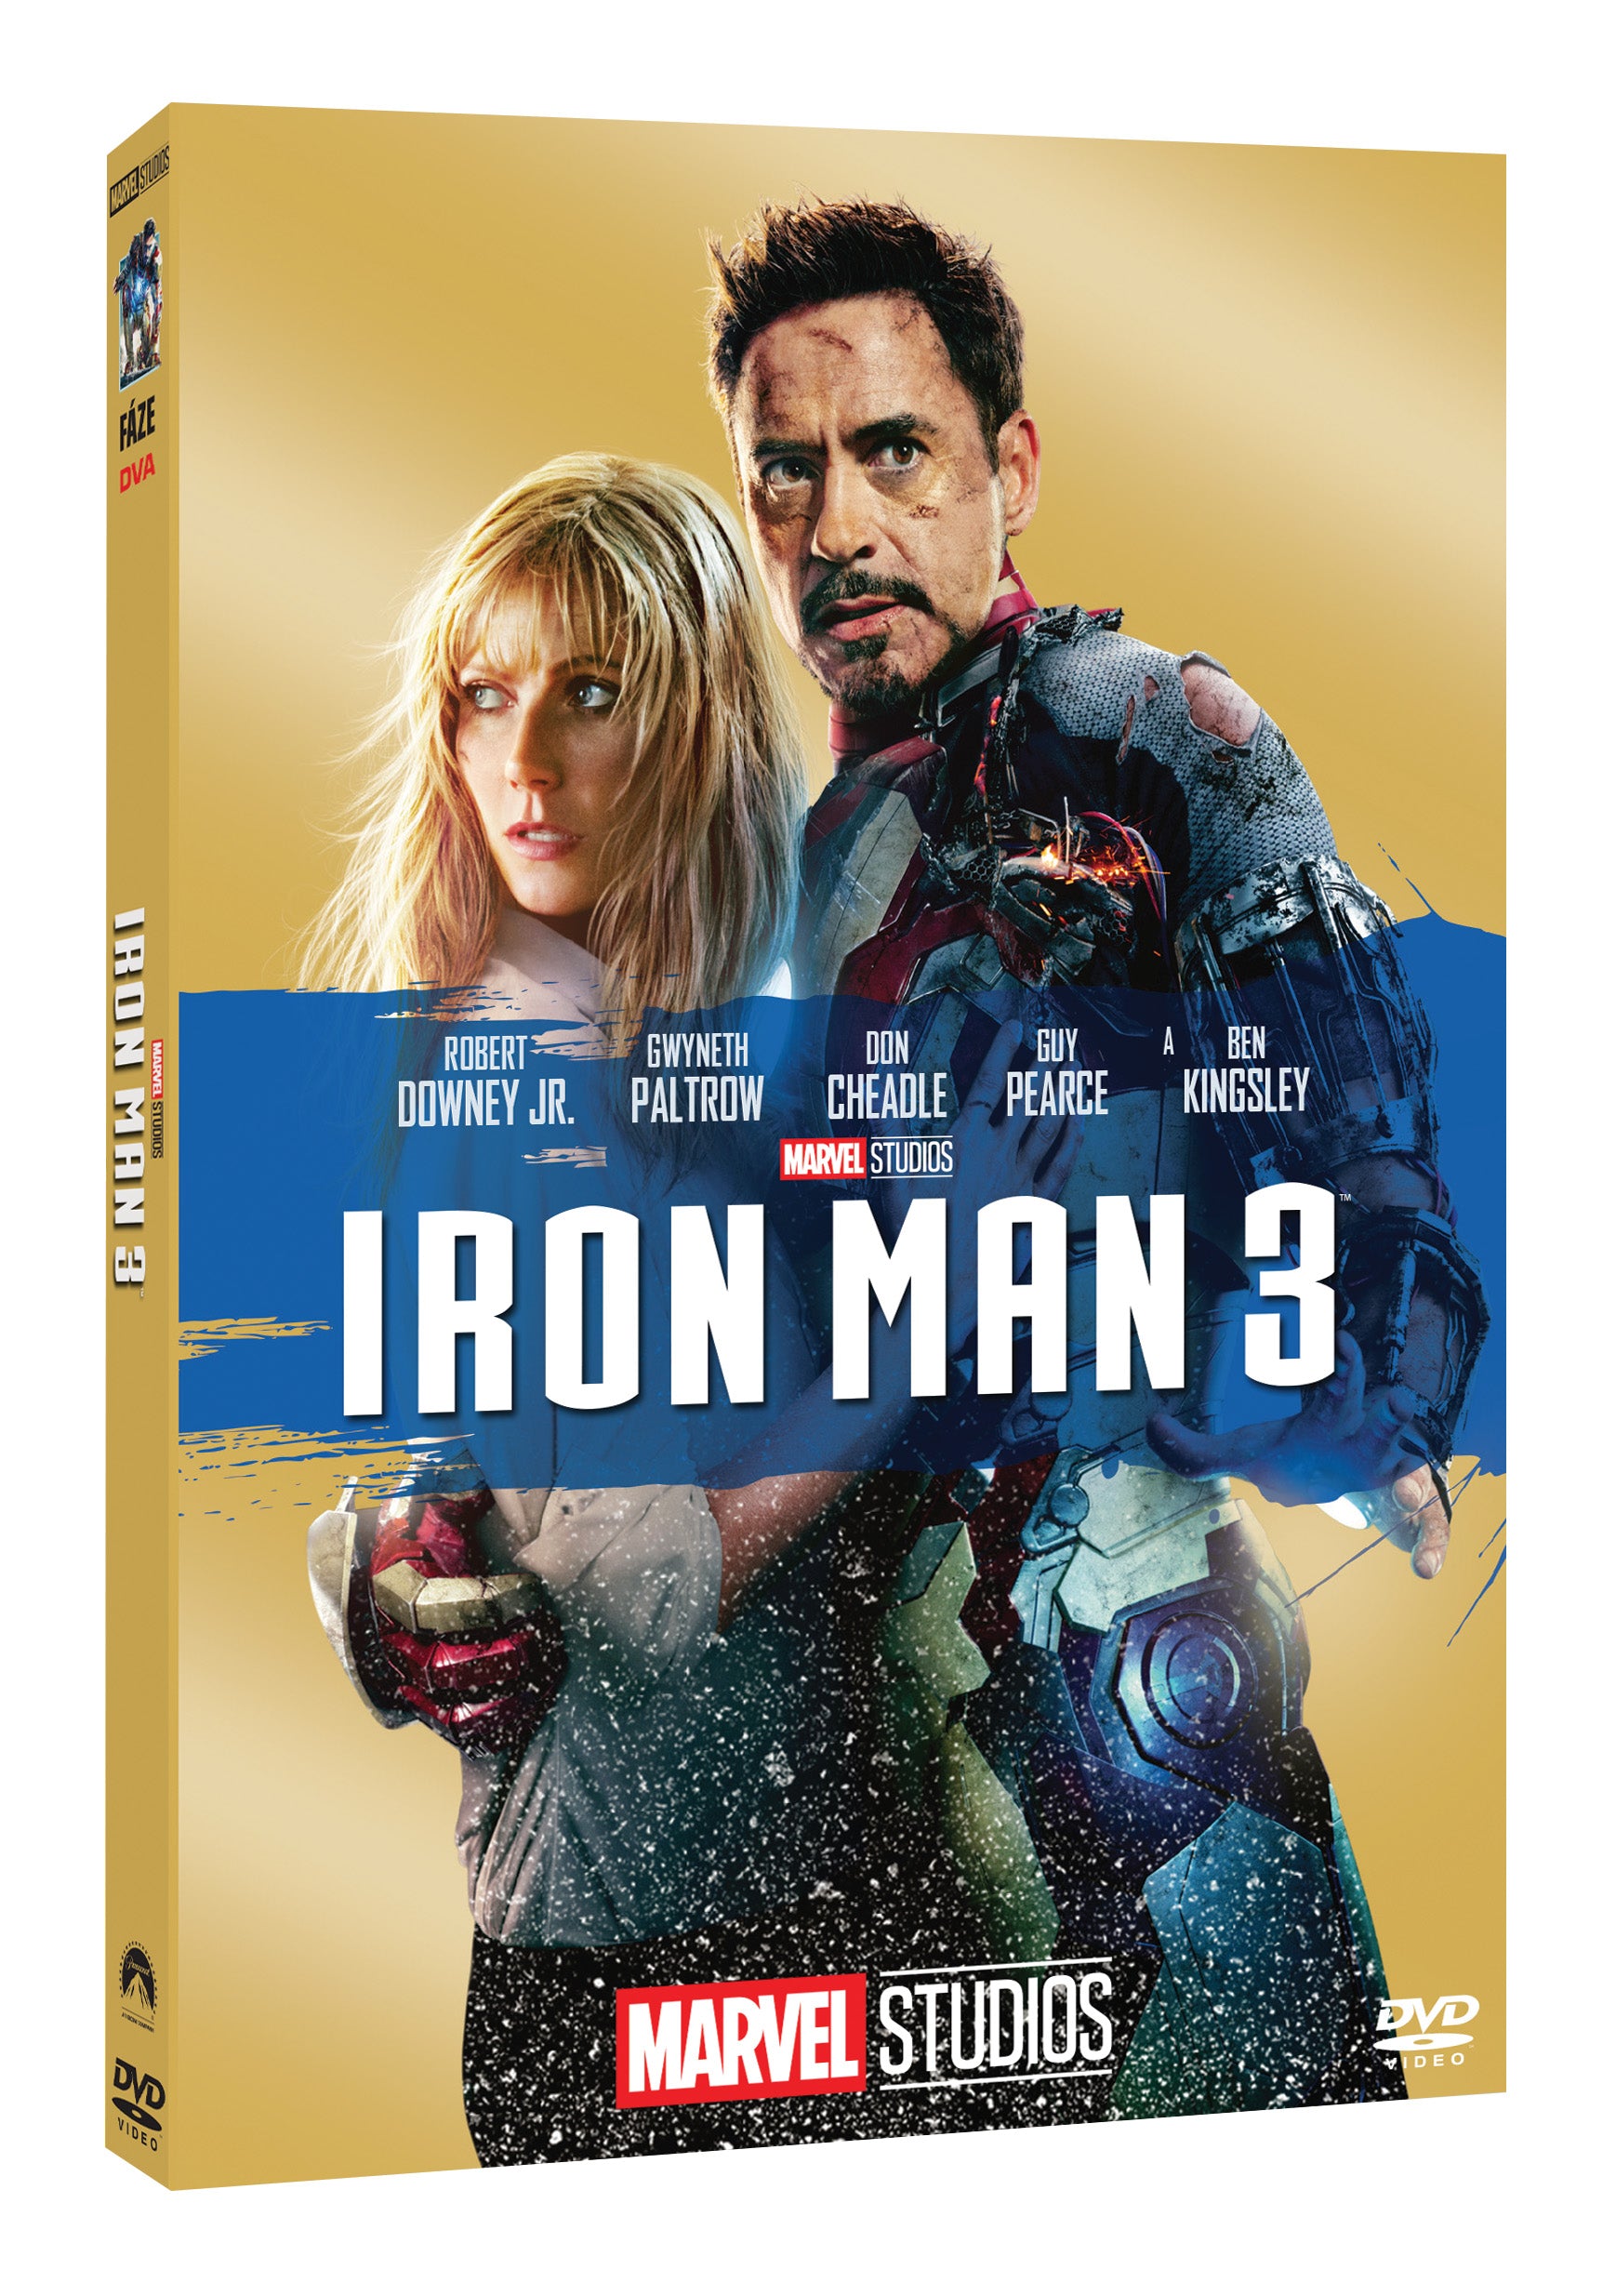 Iron Man 3 DVD - Edice Marvel 10 let / Iron Man 3